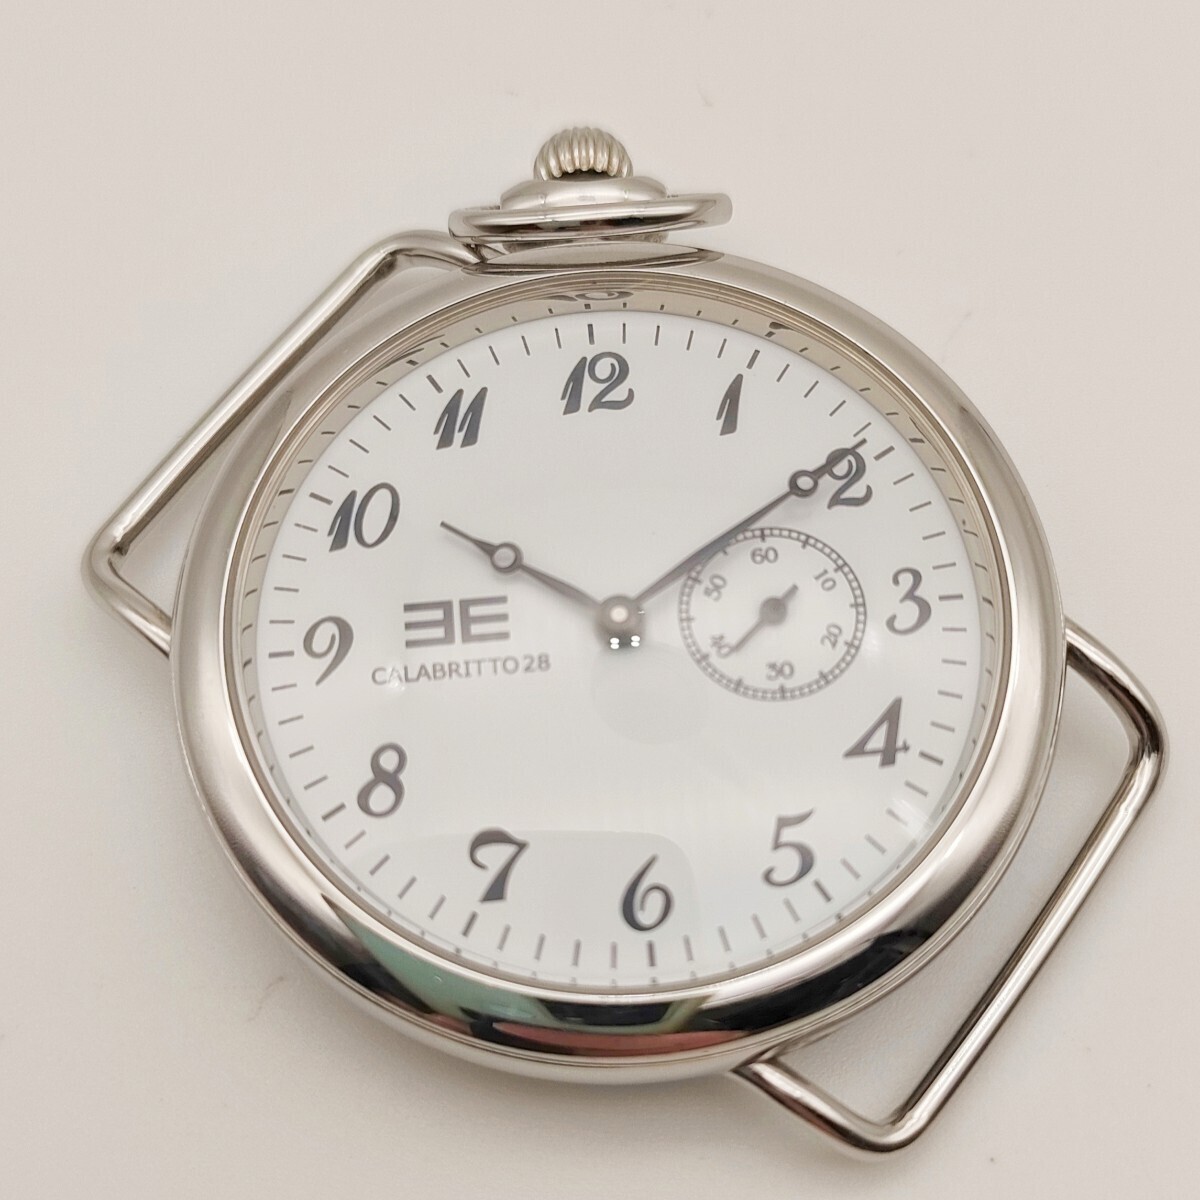 1 иен работа товар CALABRITTO карманные часы наручные часы белый циферблат текстильный ремень аналог кварц 